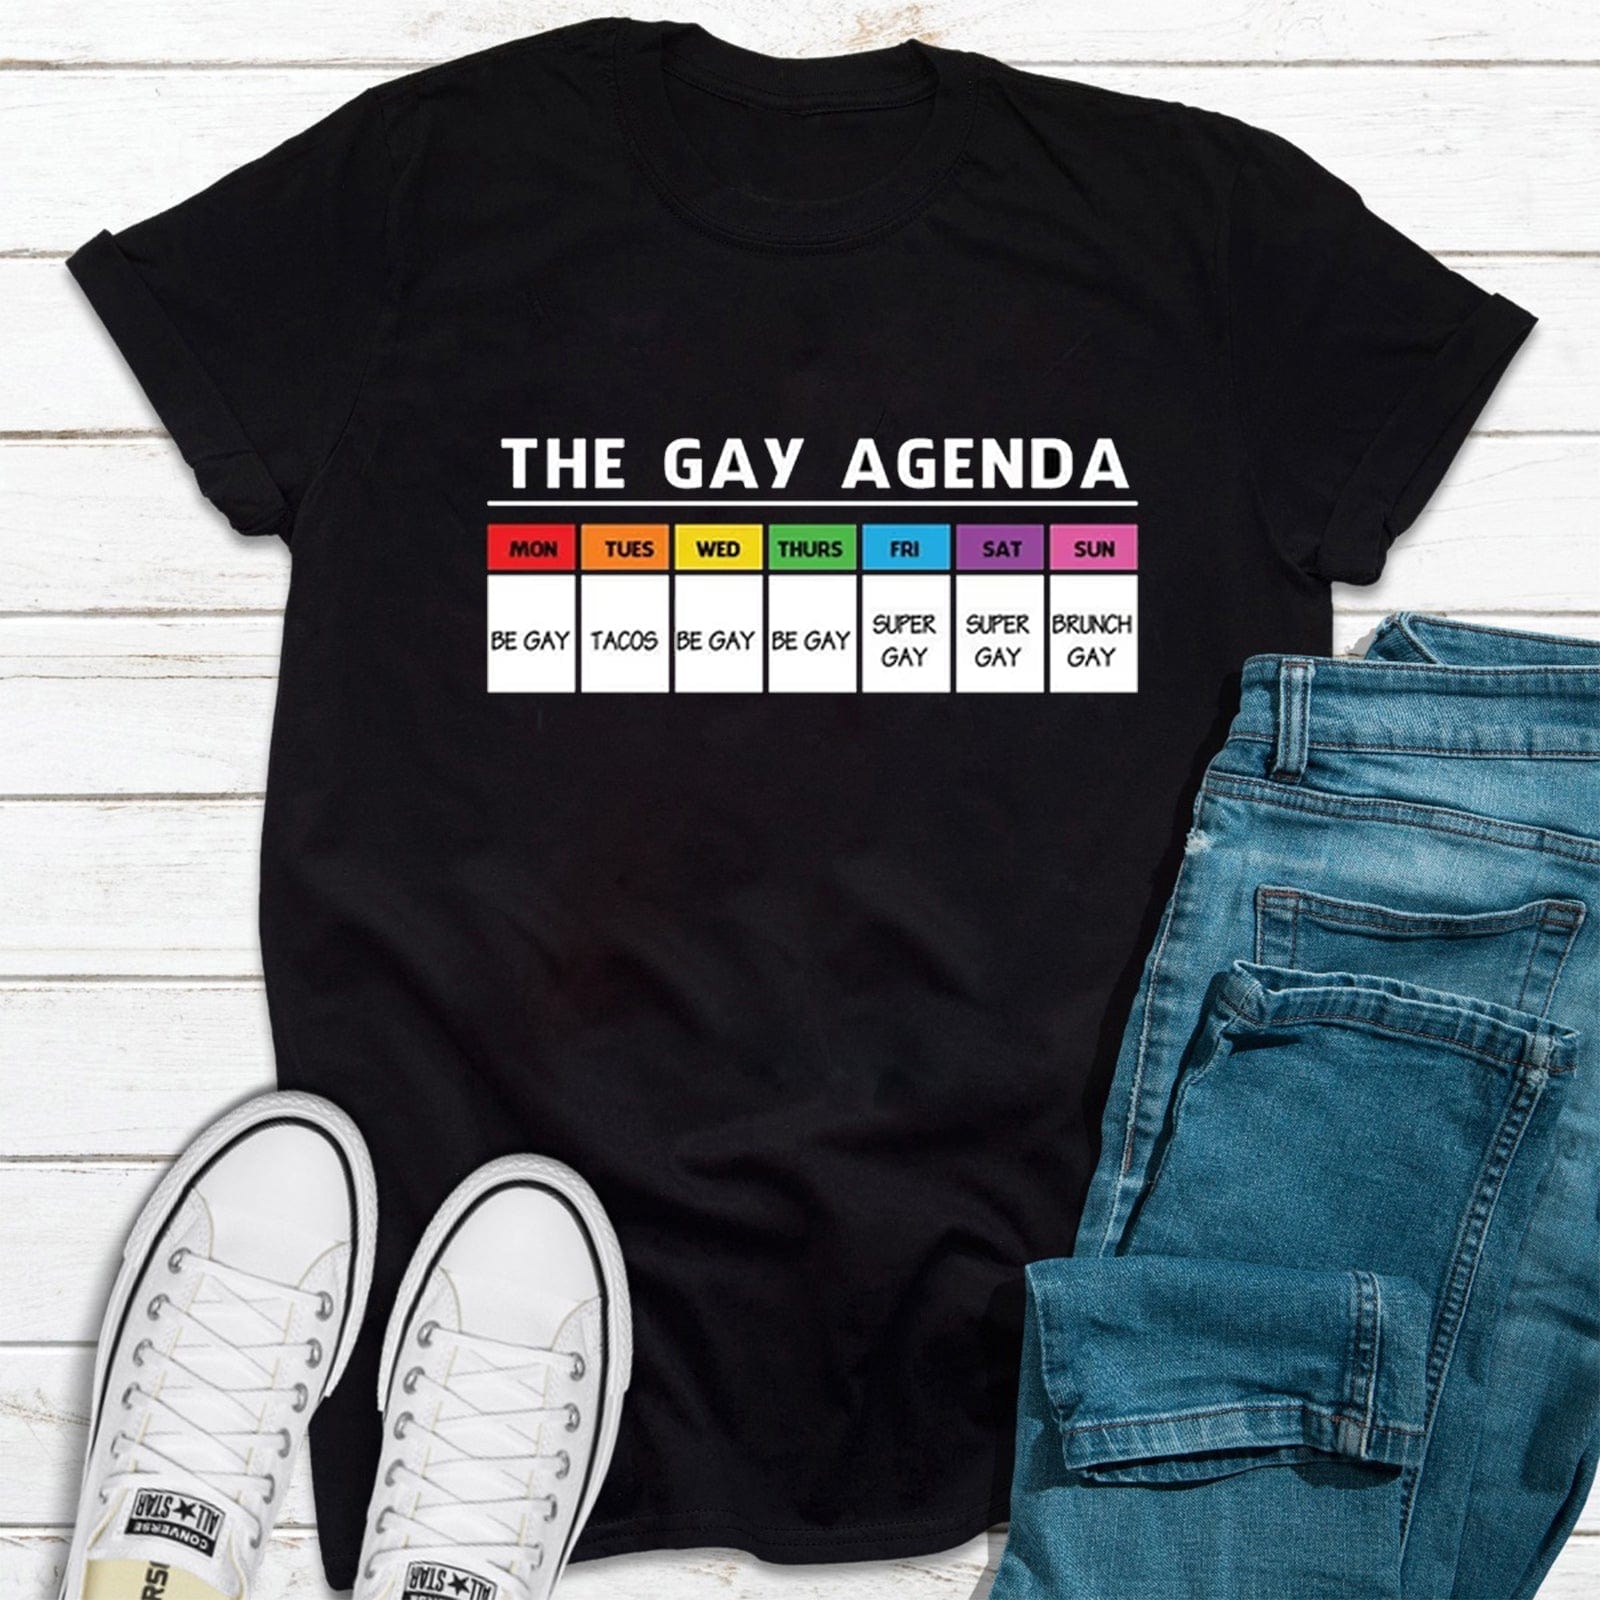 The Gay Agenda LGBT Rainbow Shirt